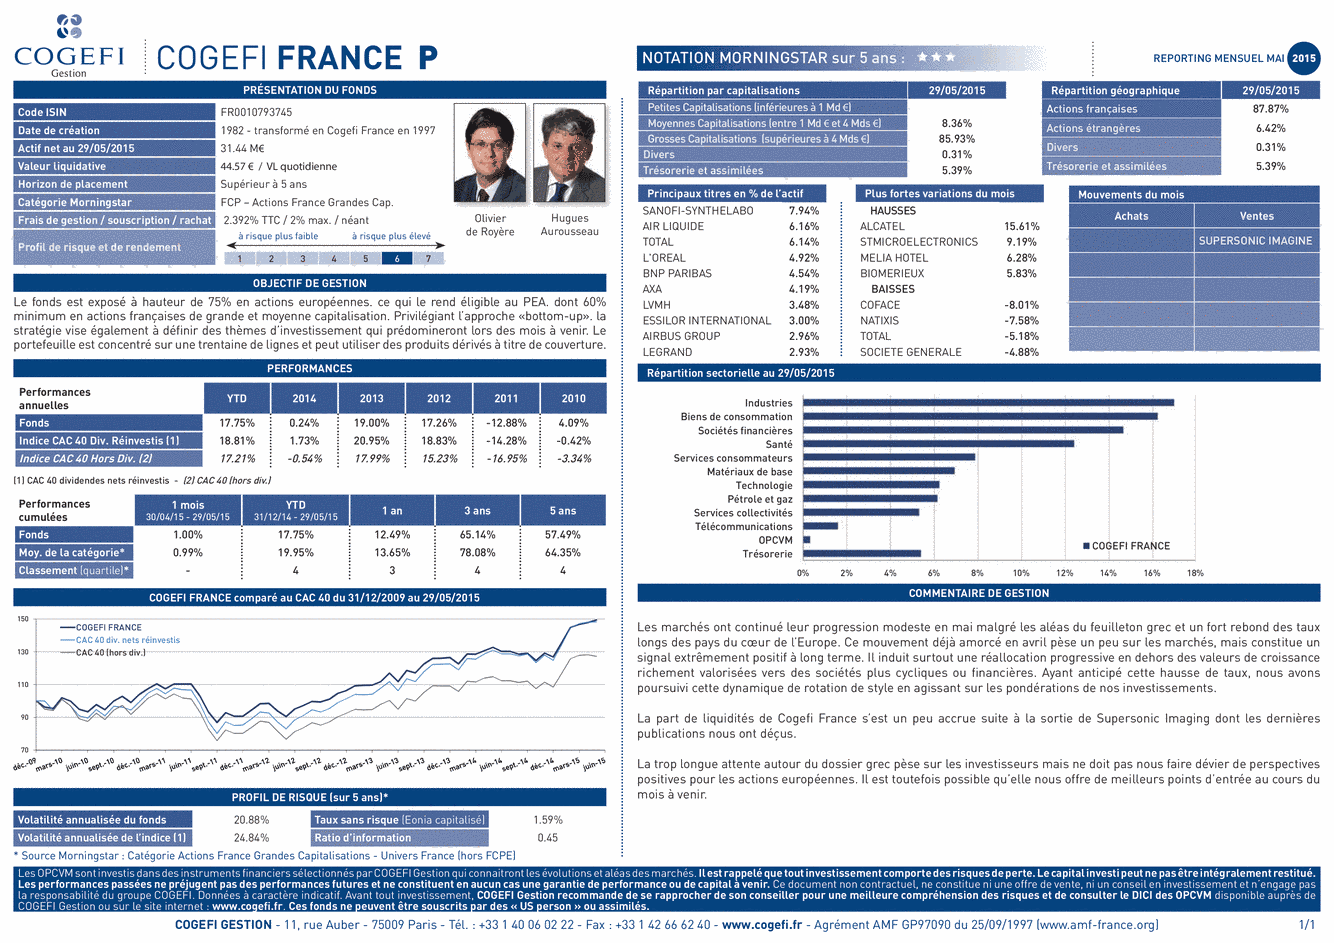 Fiche Produit Cogefi France - 31/05/2015 - French